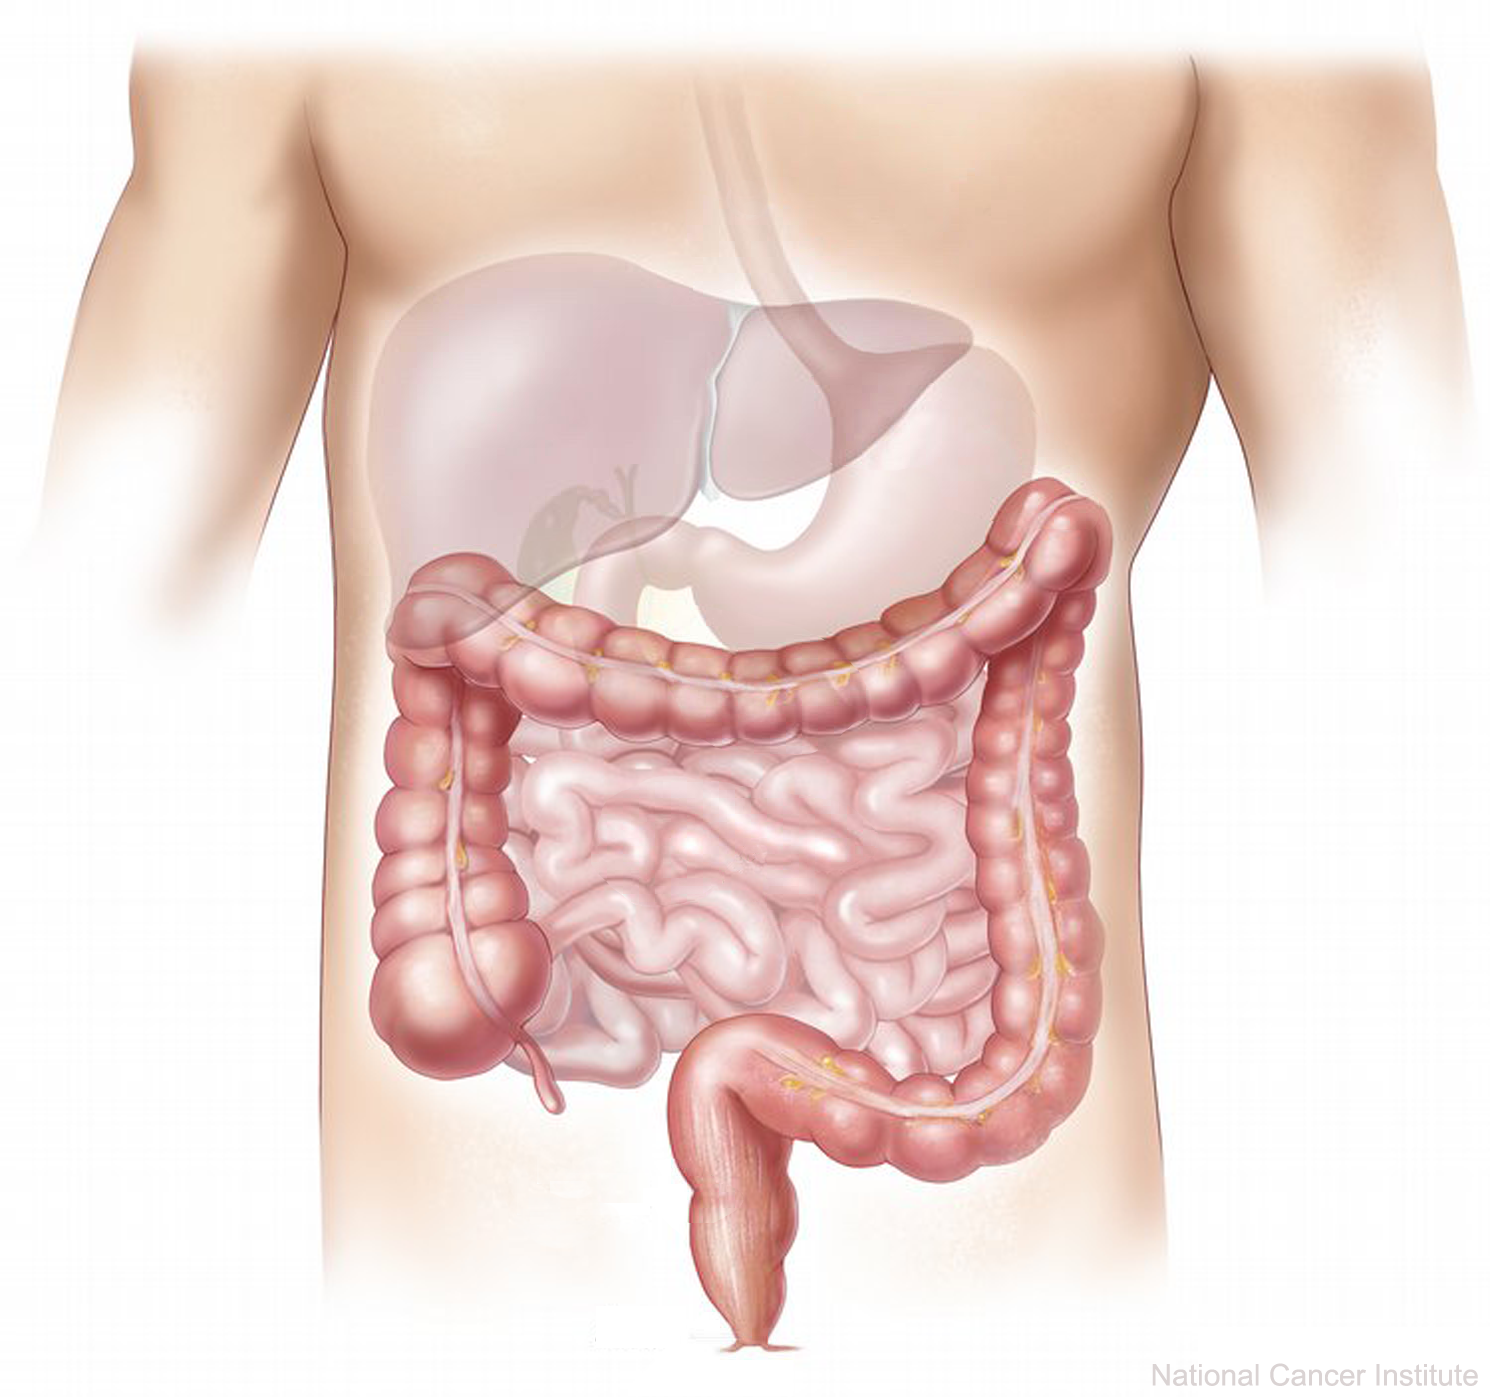 File:Digestive system diagram